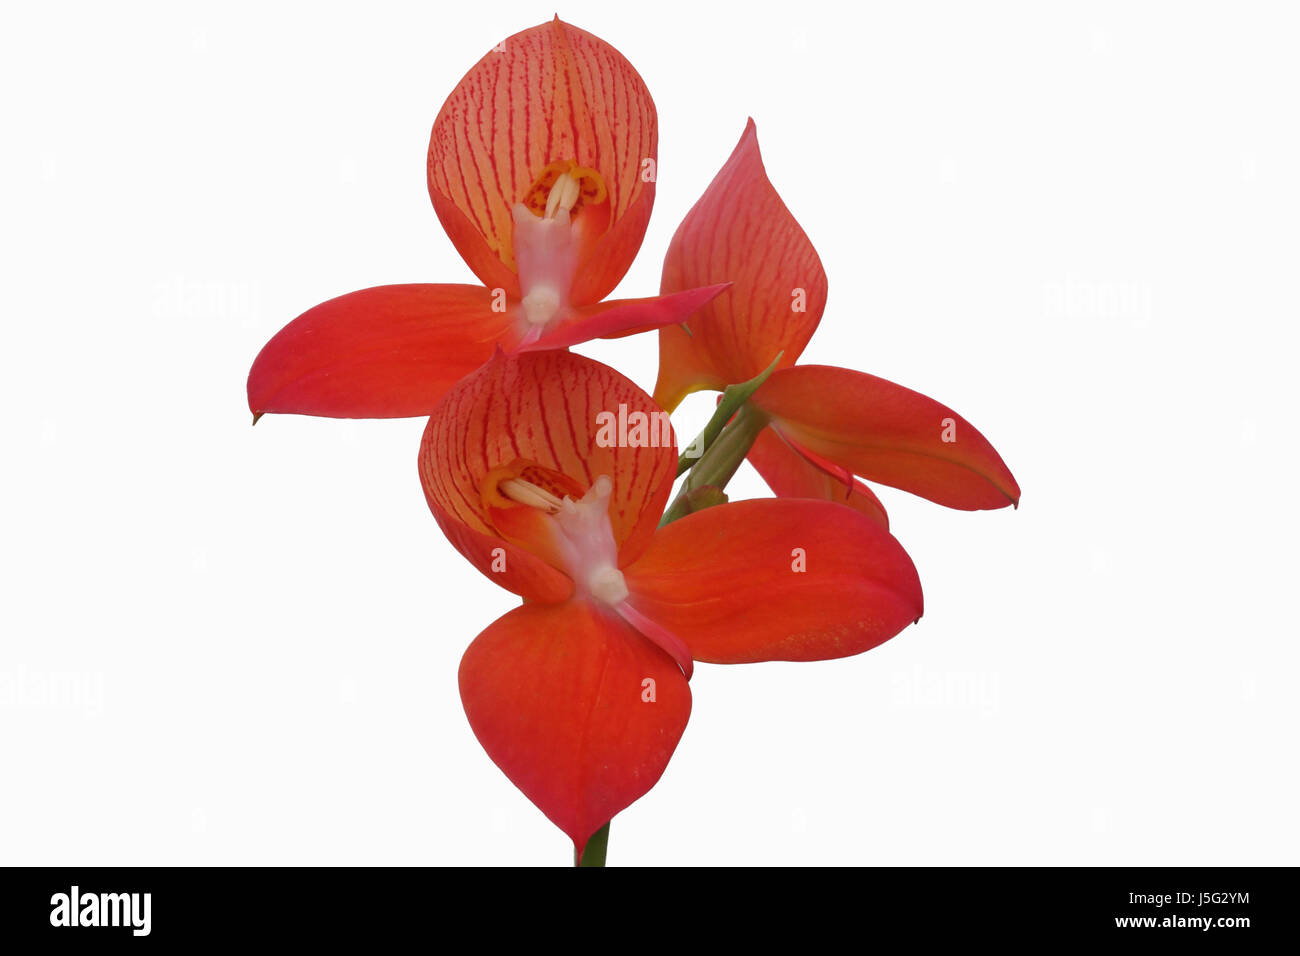 Orchid, Flower of the gods, Disa uniflora 'Foam', Studio shot of red flowers on single stem. Stock Photo